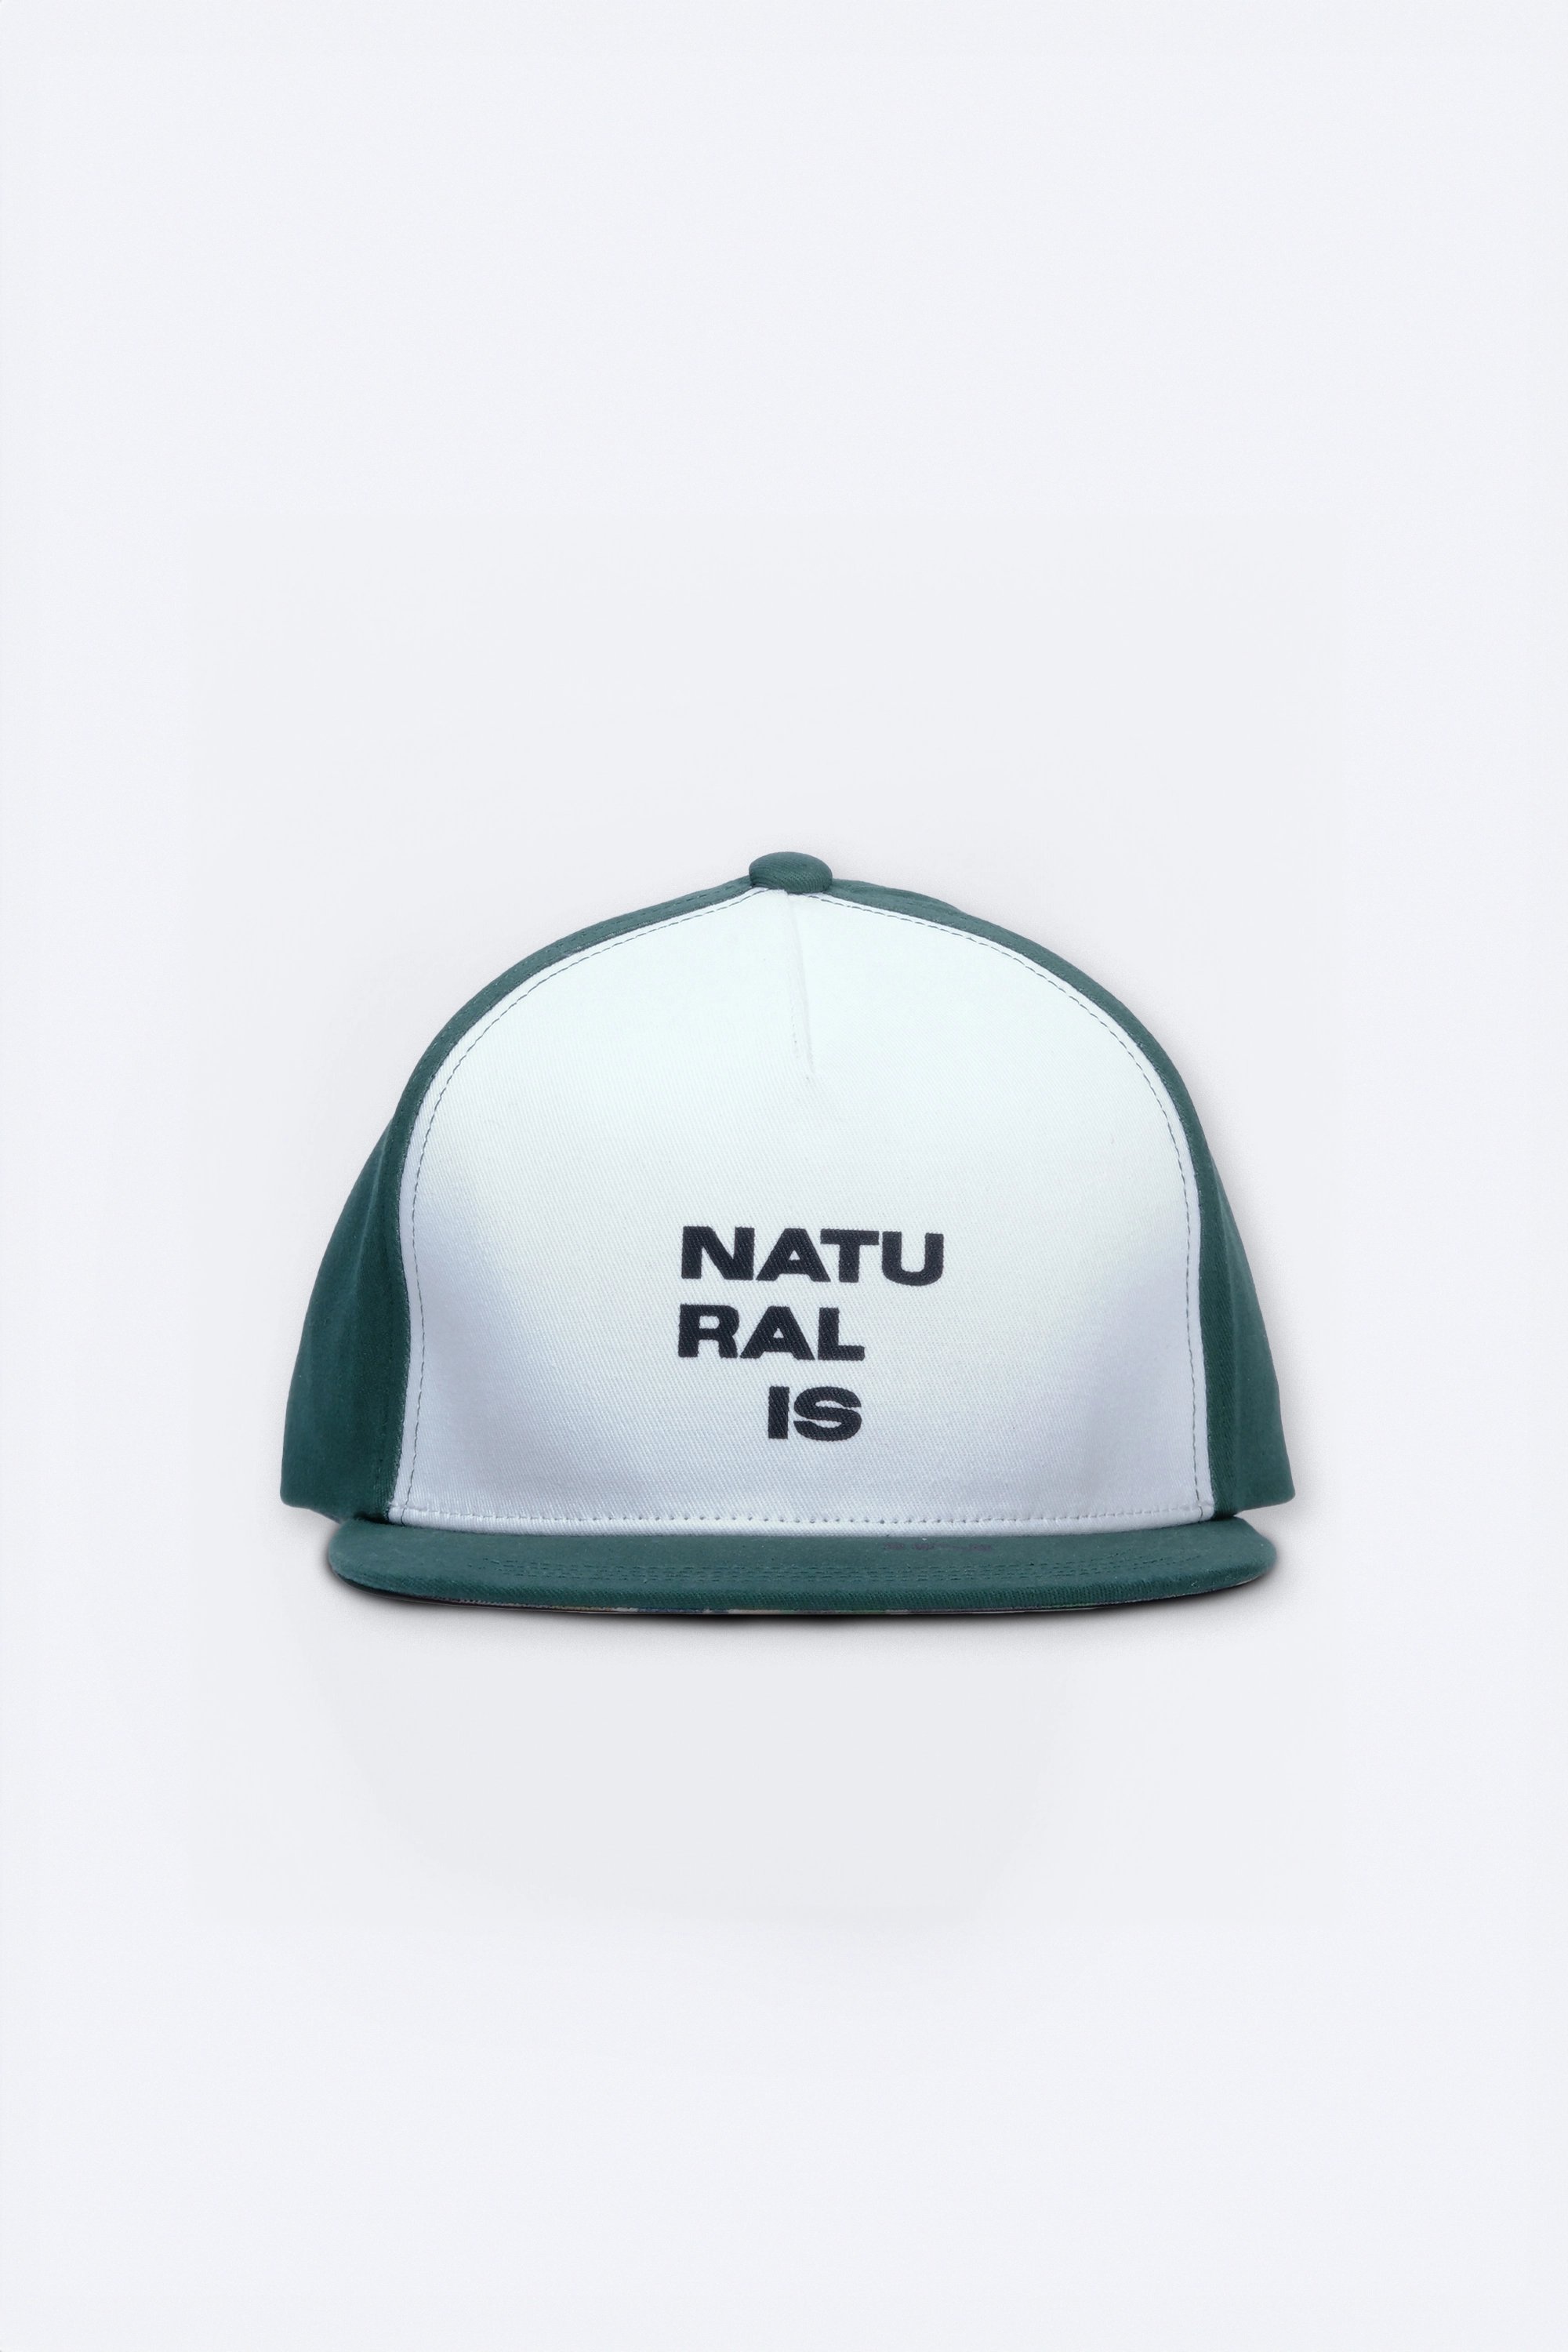 Mato Pamuklu Snapback Şapka - Koyu Yeşil